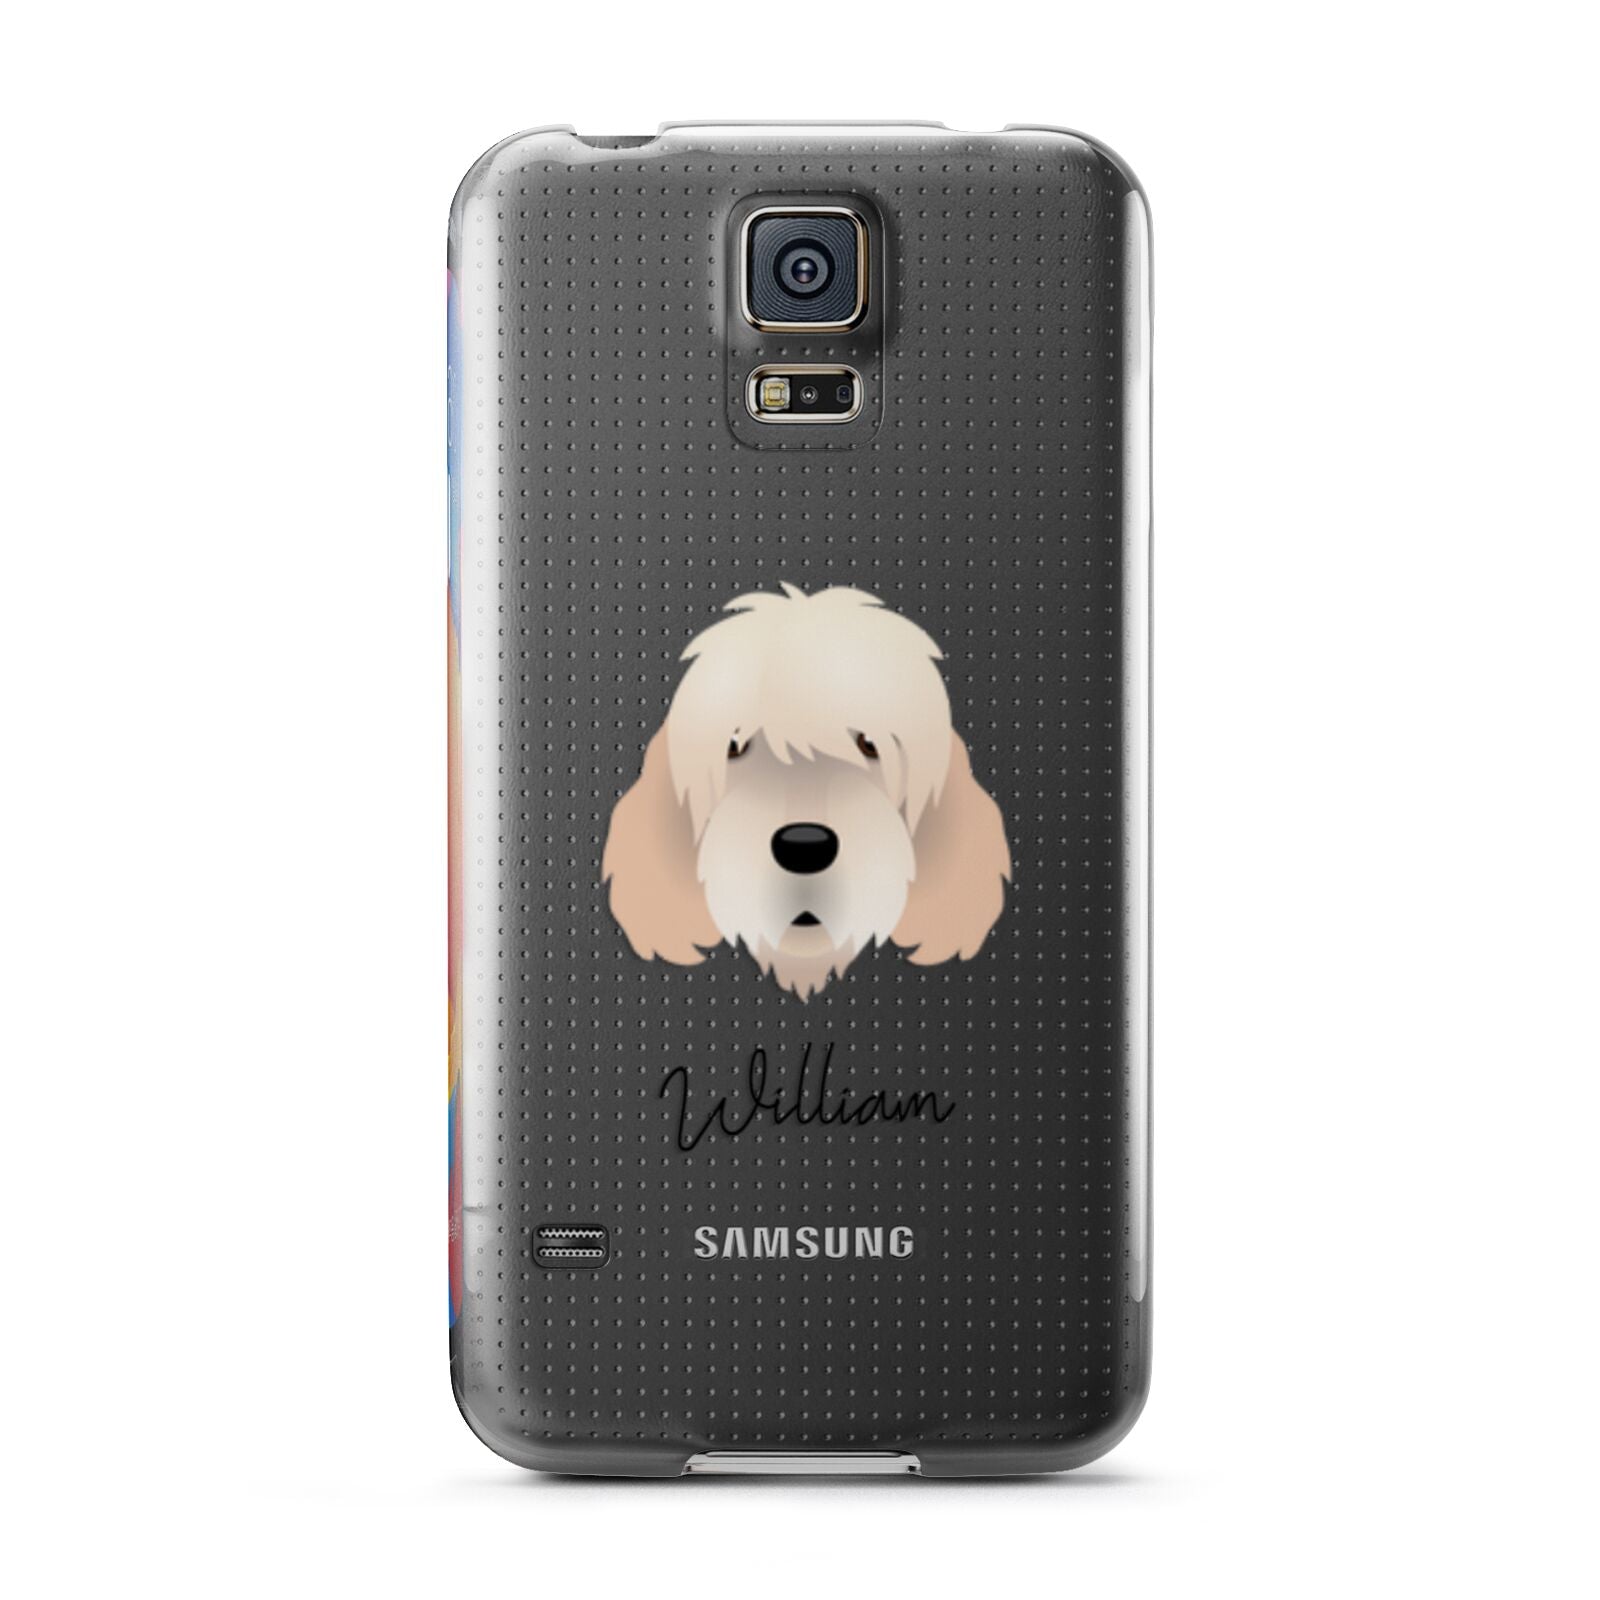 Otterhound Personalised Samsung Galaxy S5 Case